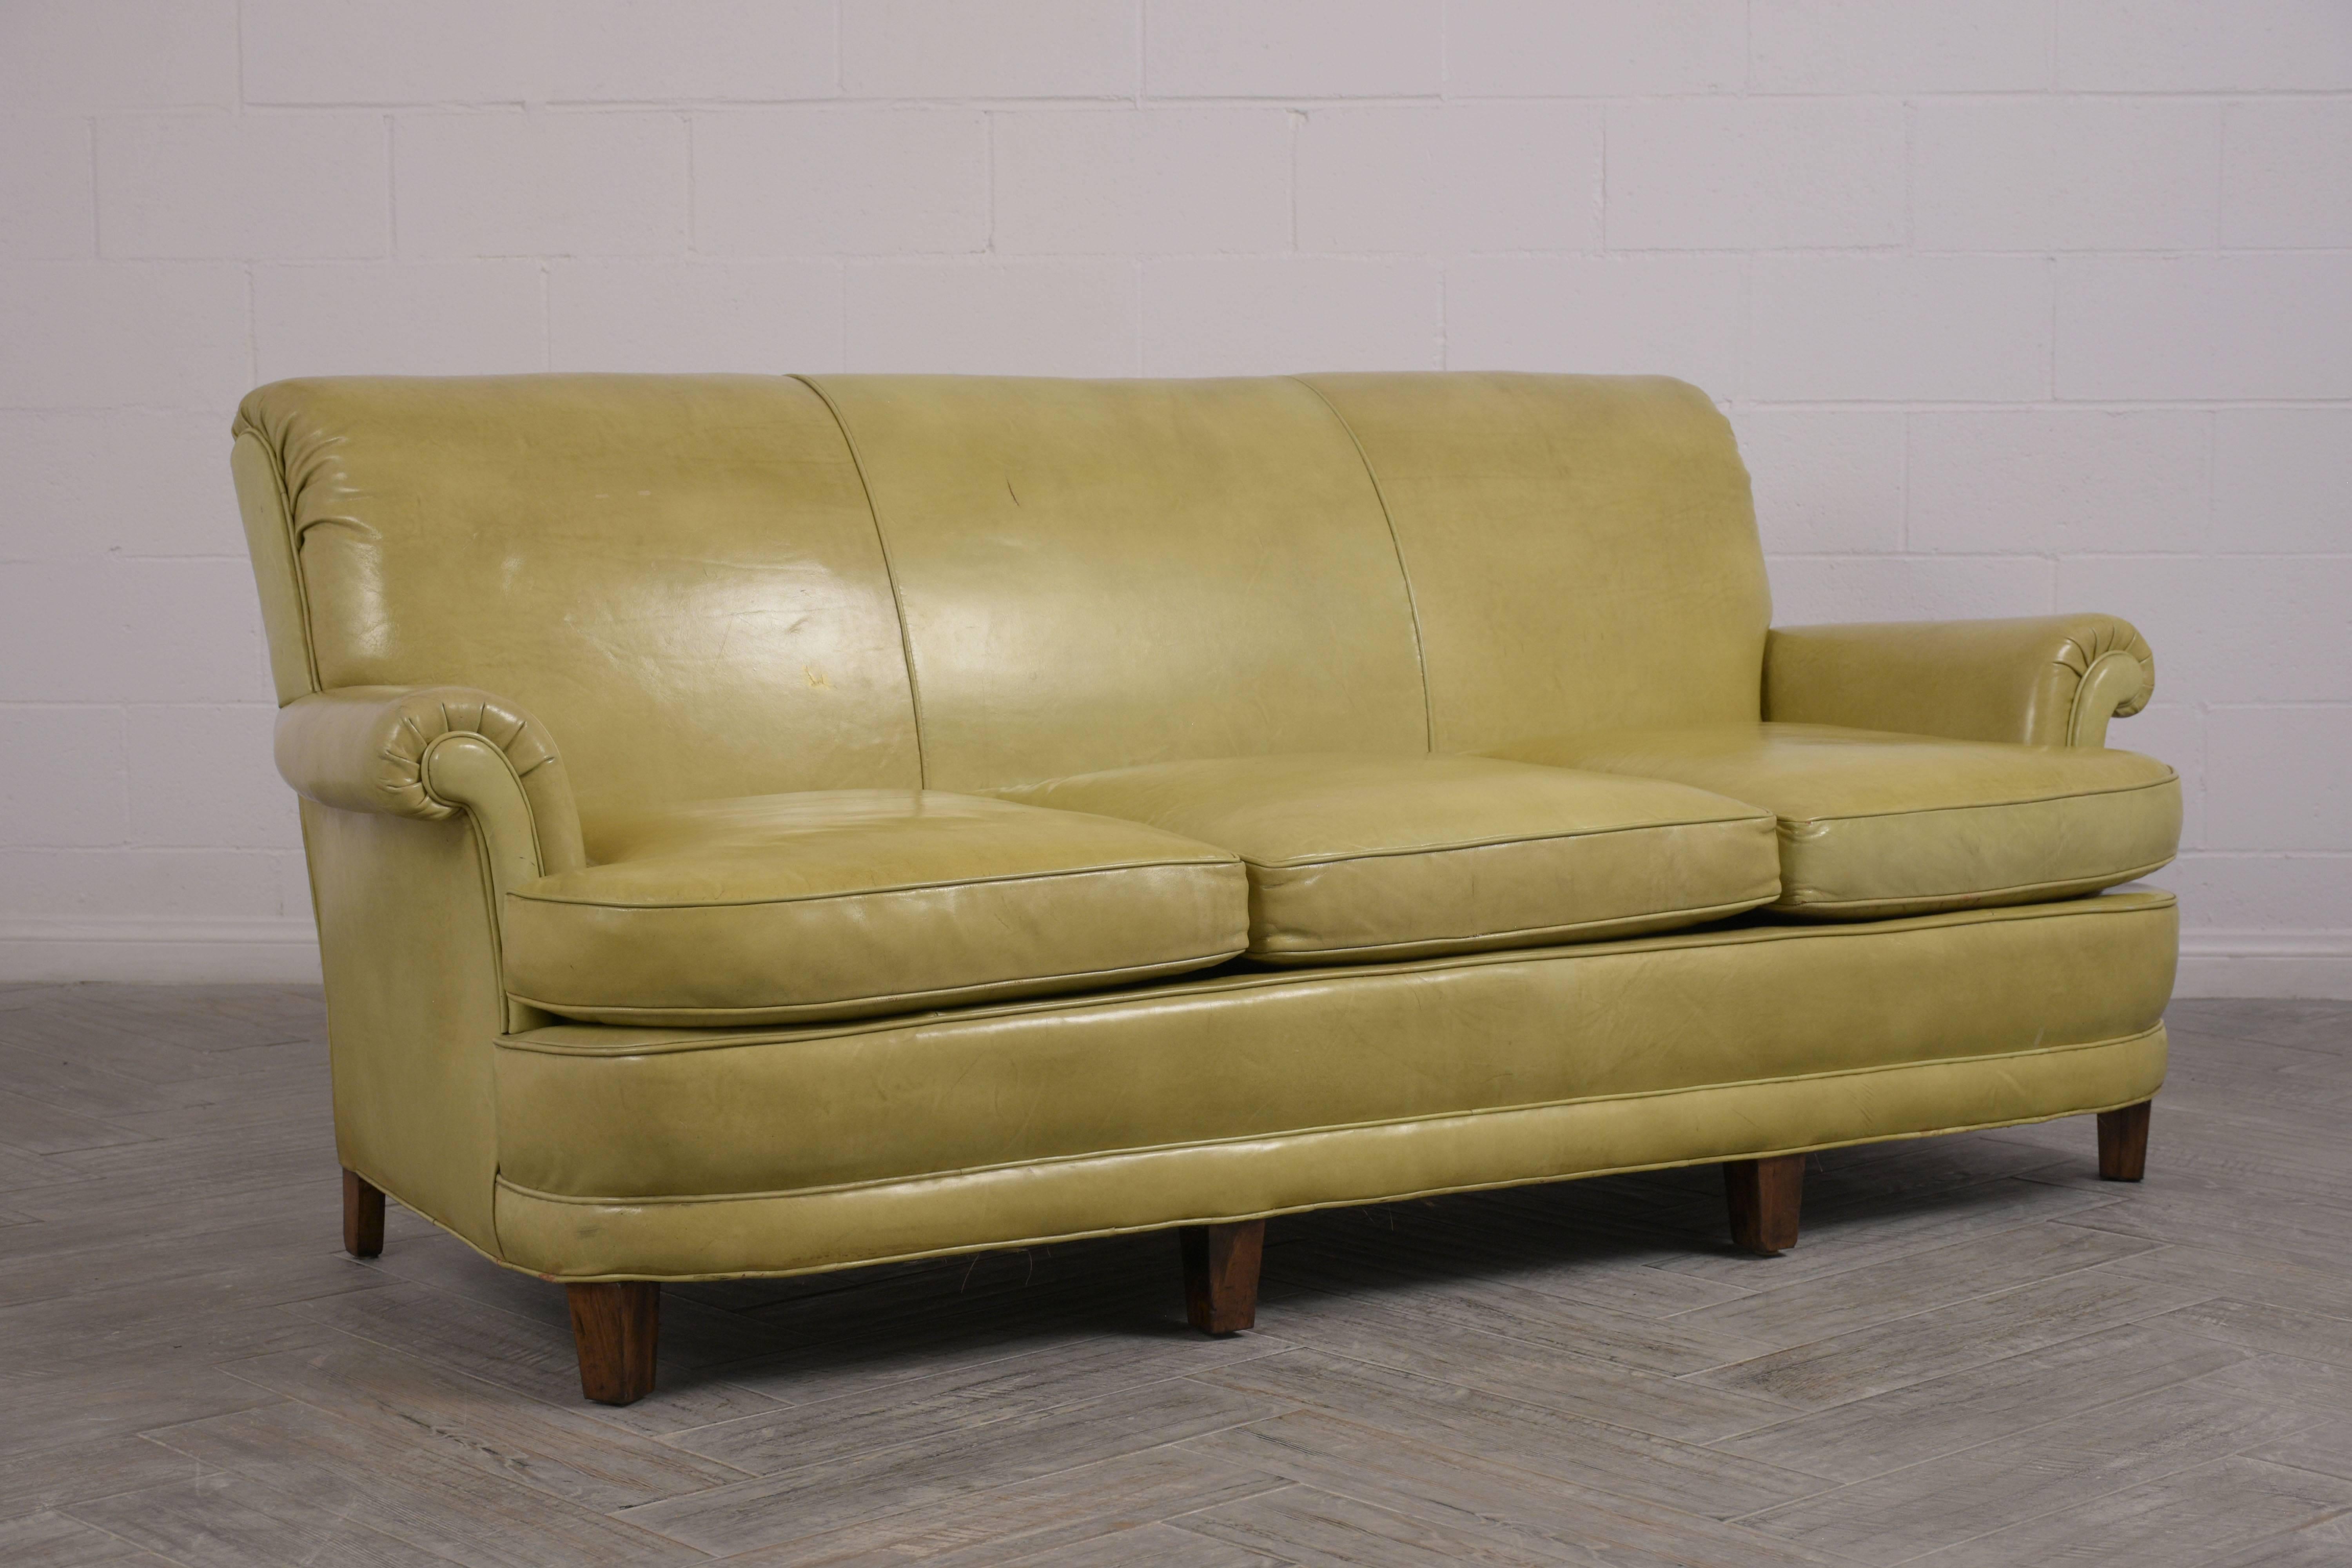 Regency 1960's Three-Seat Leather Sofa